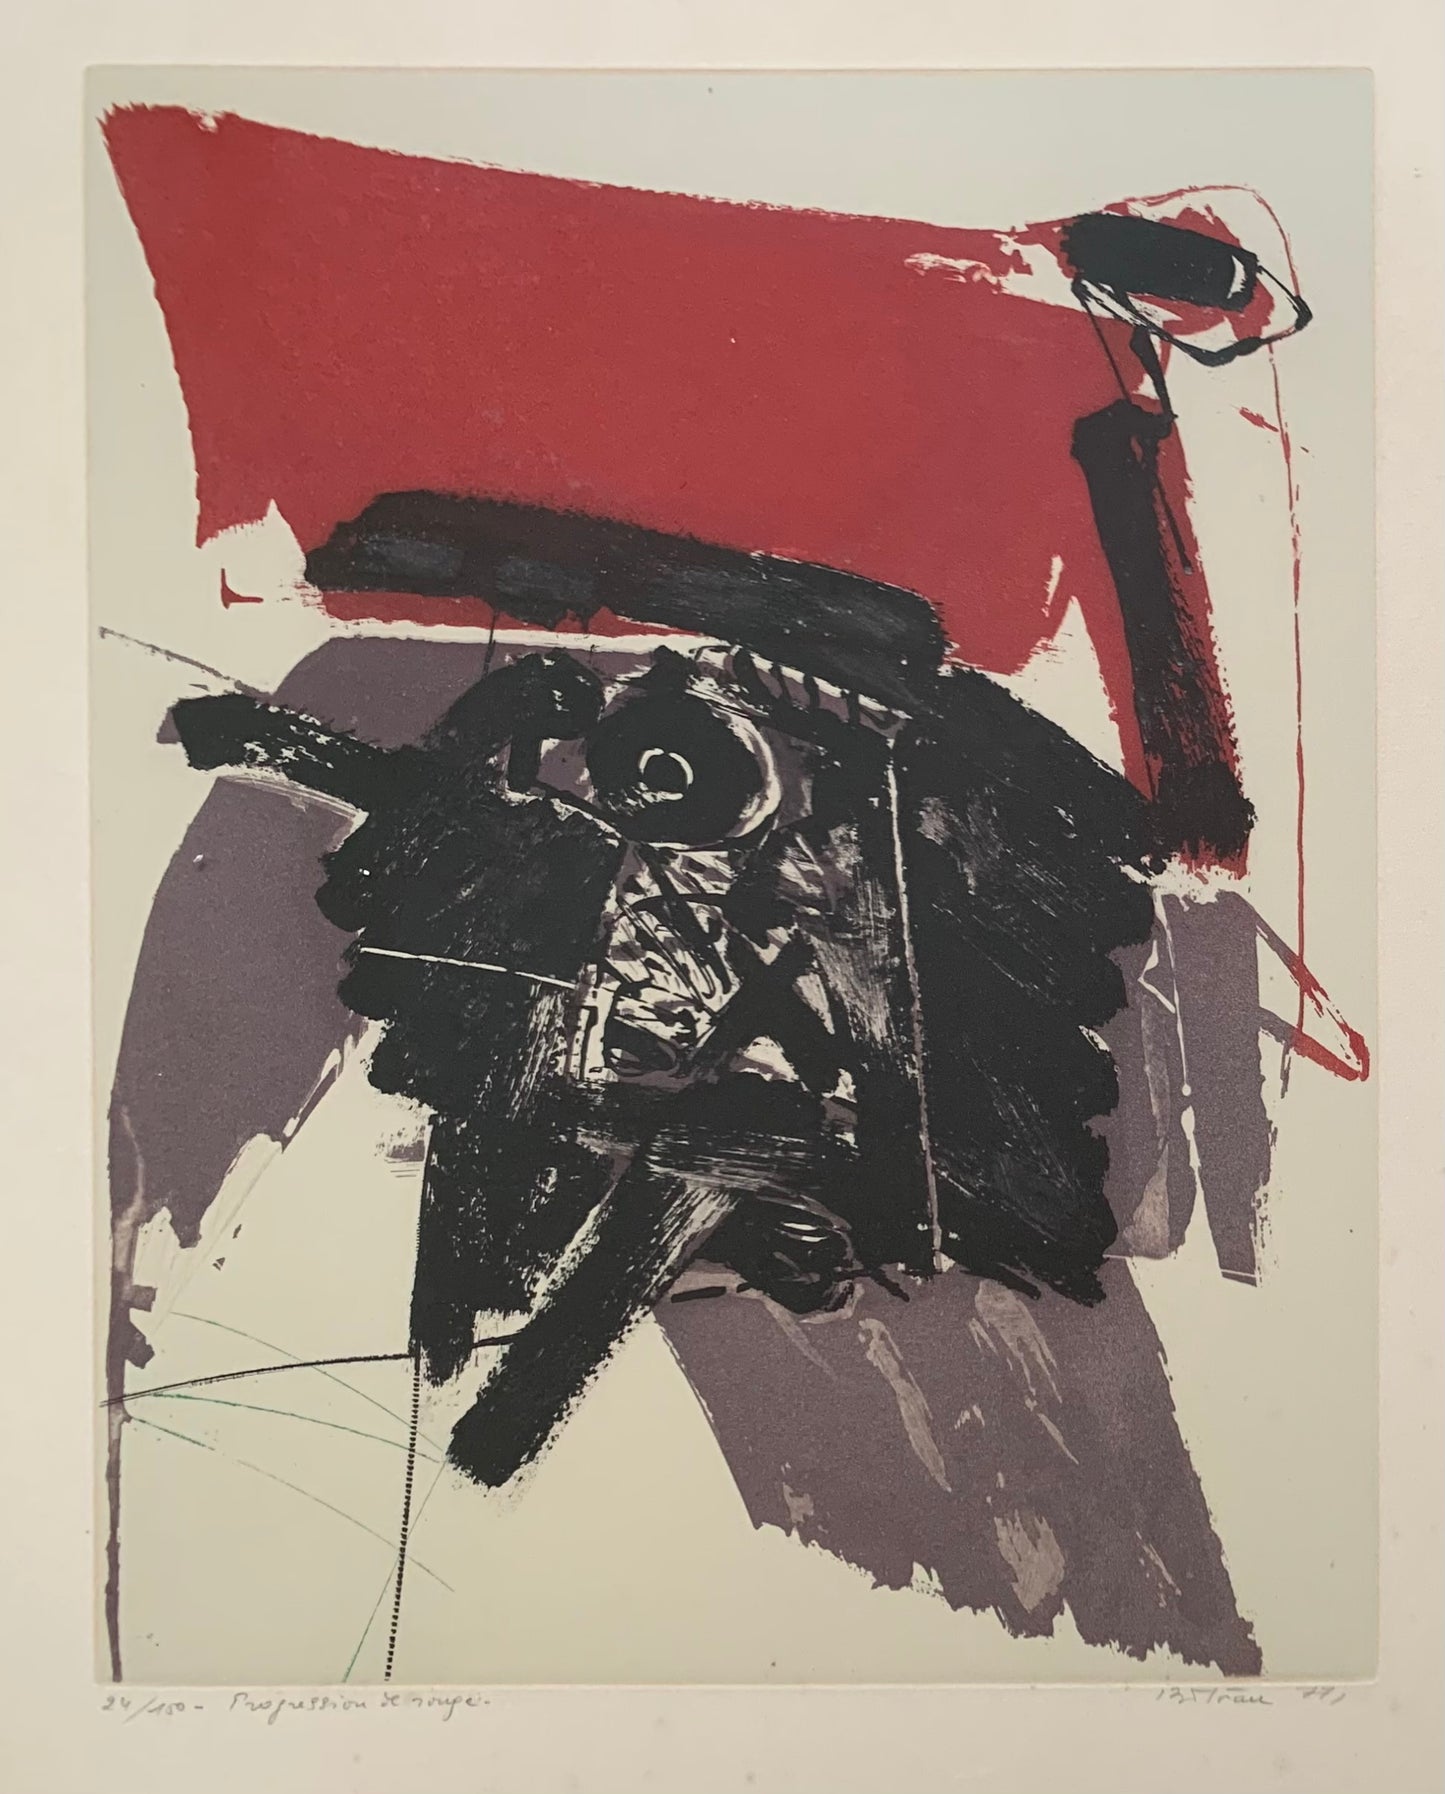 Albert Bitran. “Progression de rouge”, 1977